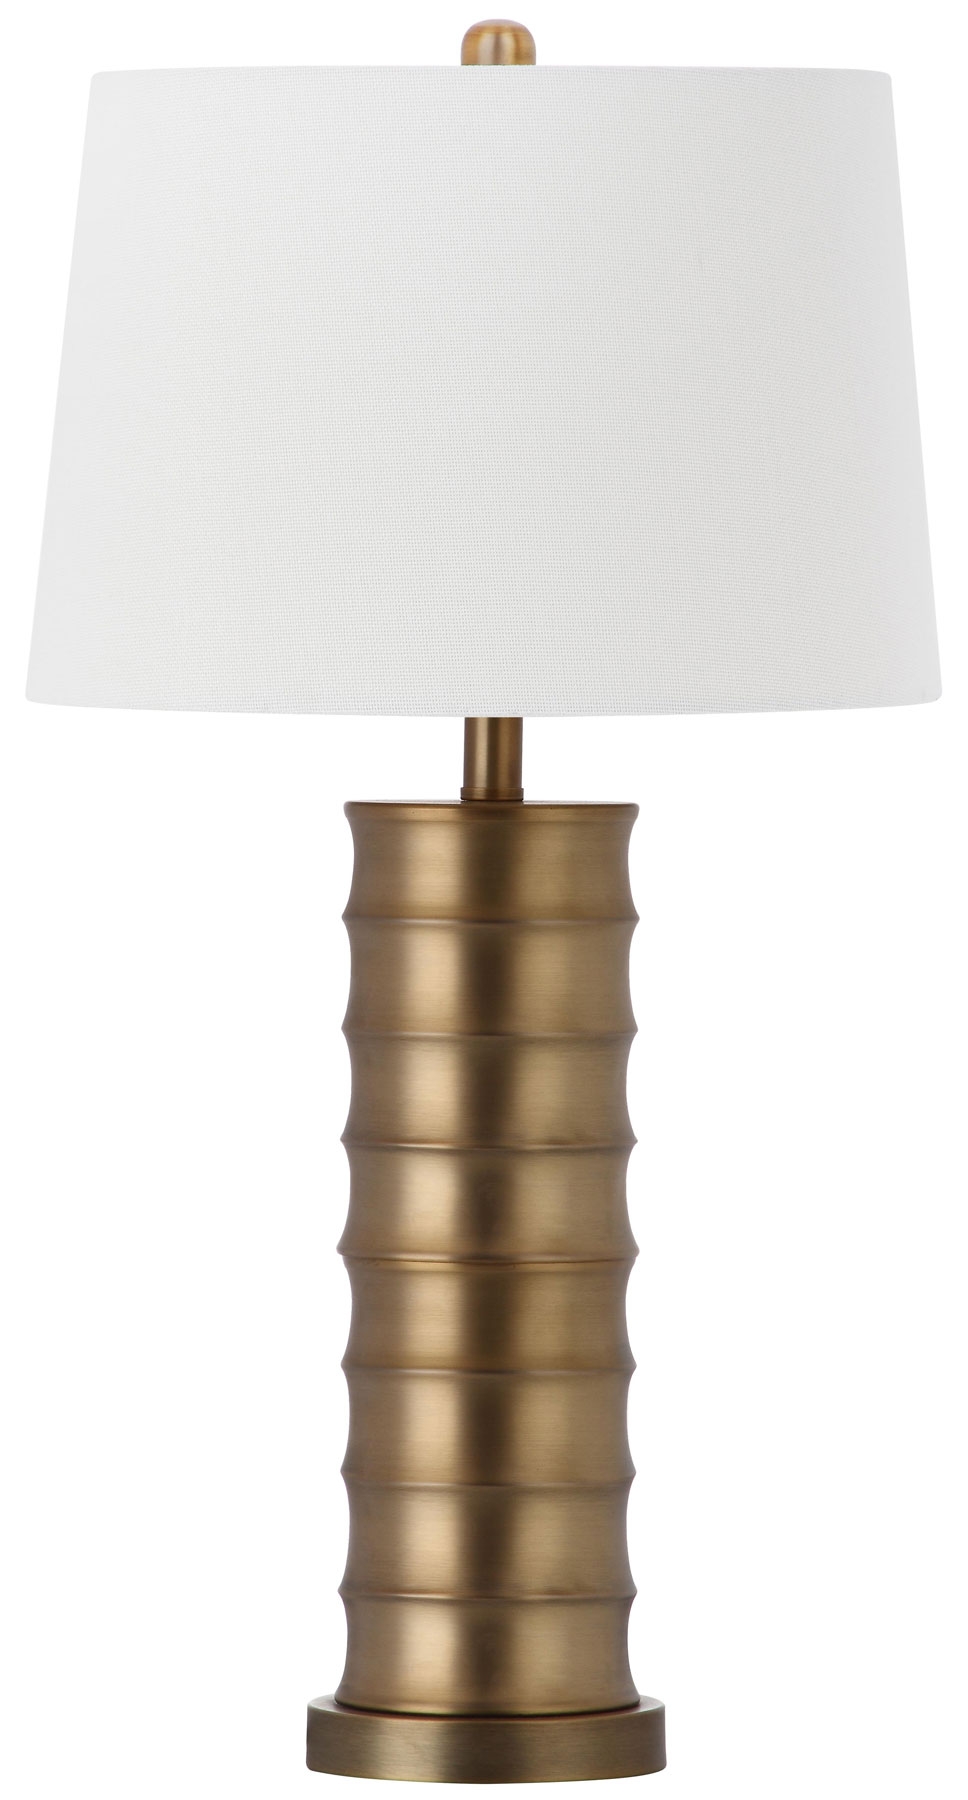 LINUS BRASS COLUMN TABLE LAMP -SET OF 2 - Image 1